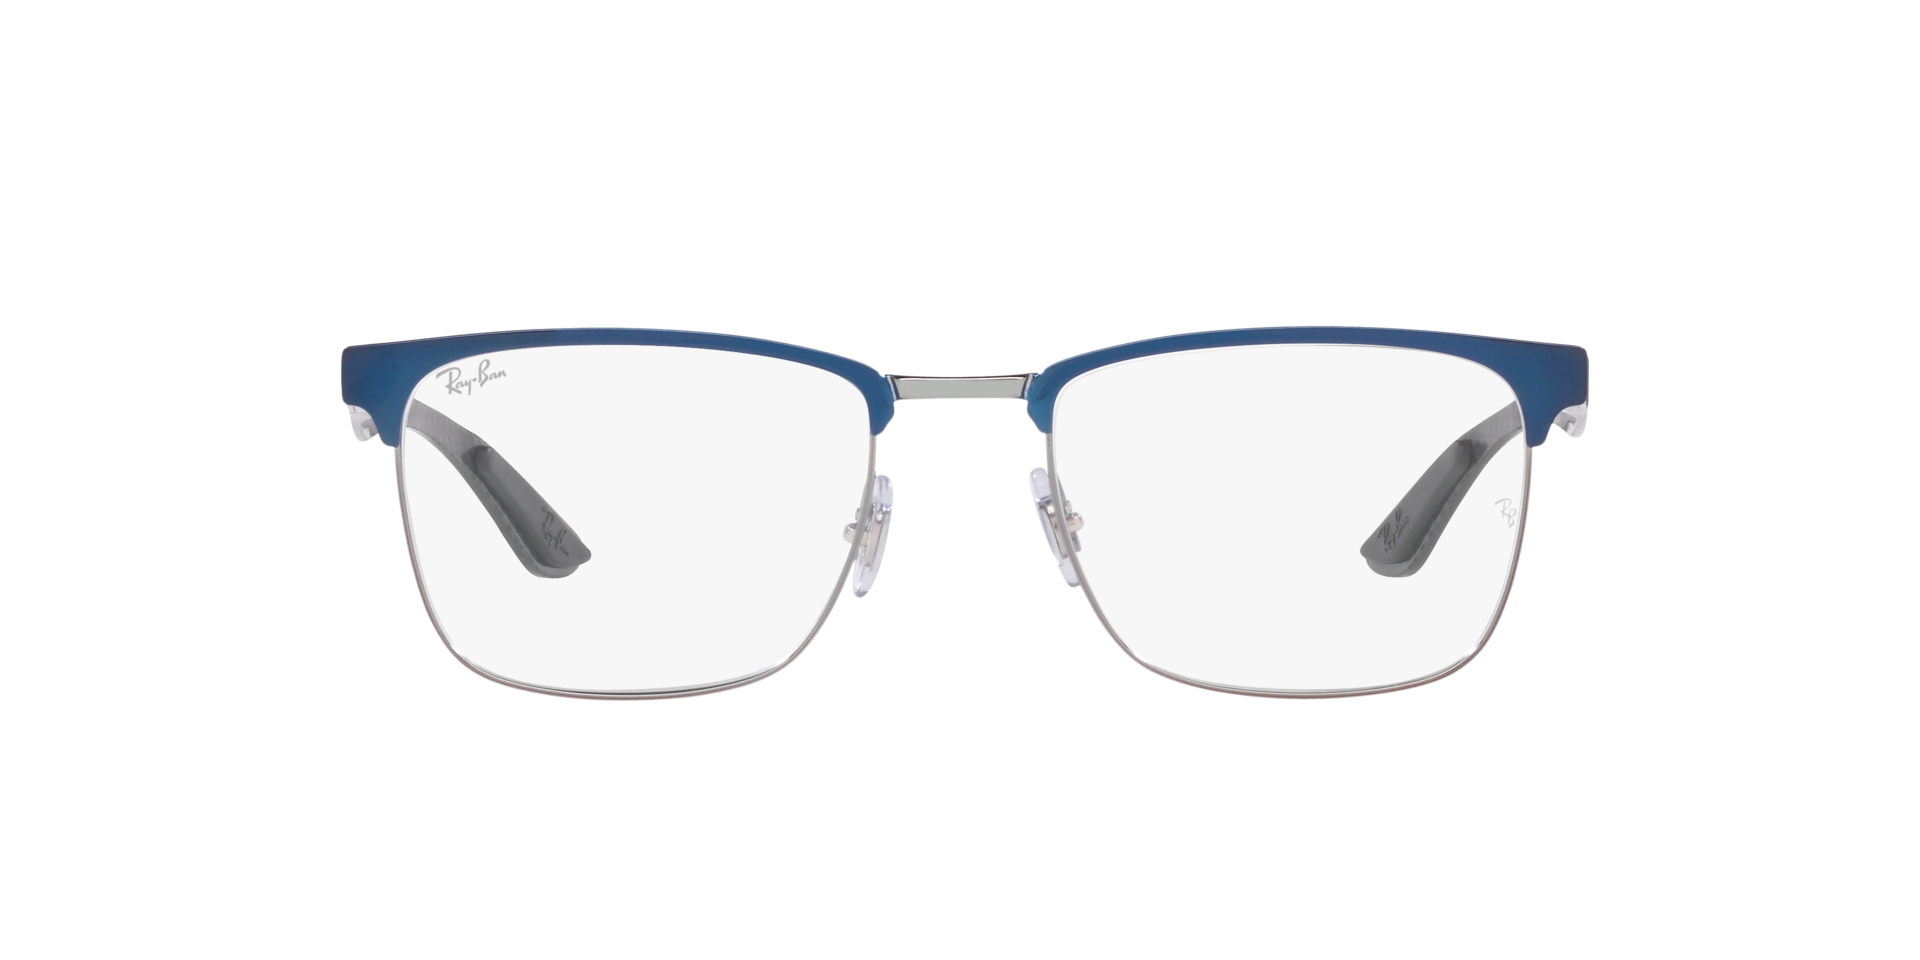 Buy Ray-Ban Performance Sunglasses Online.